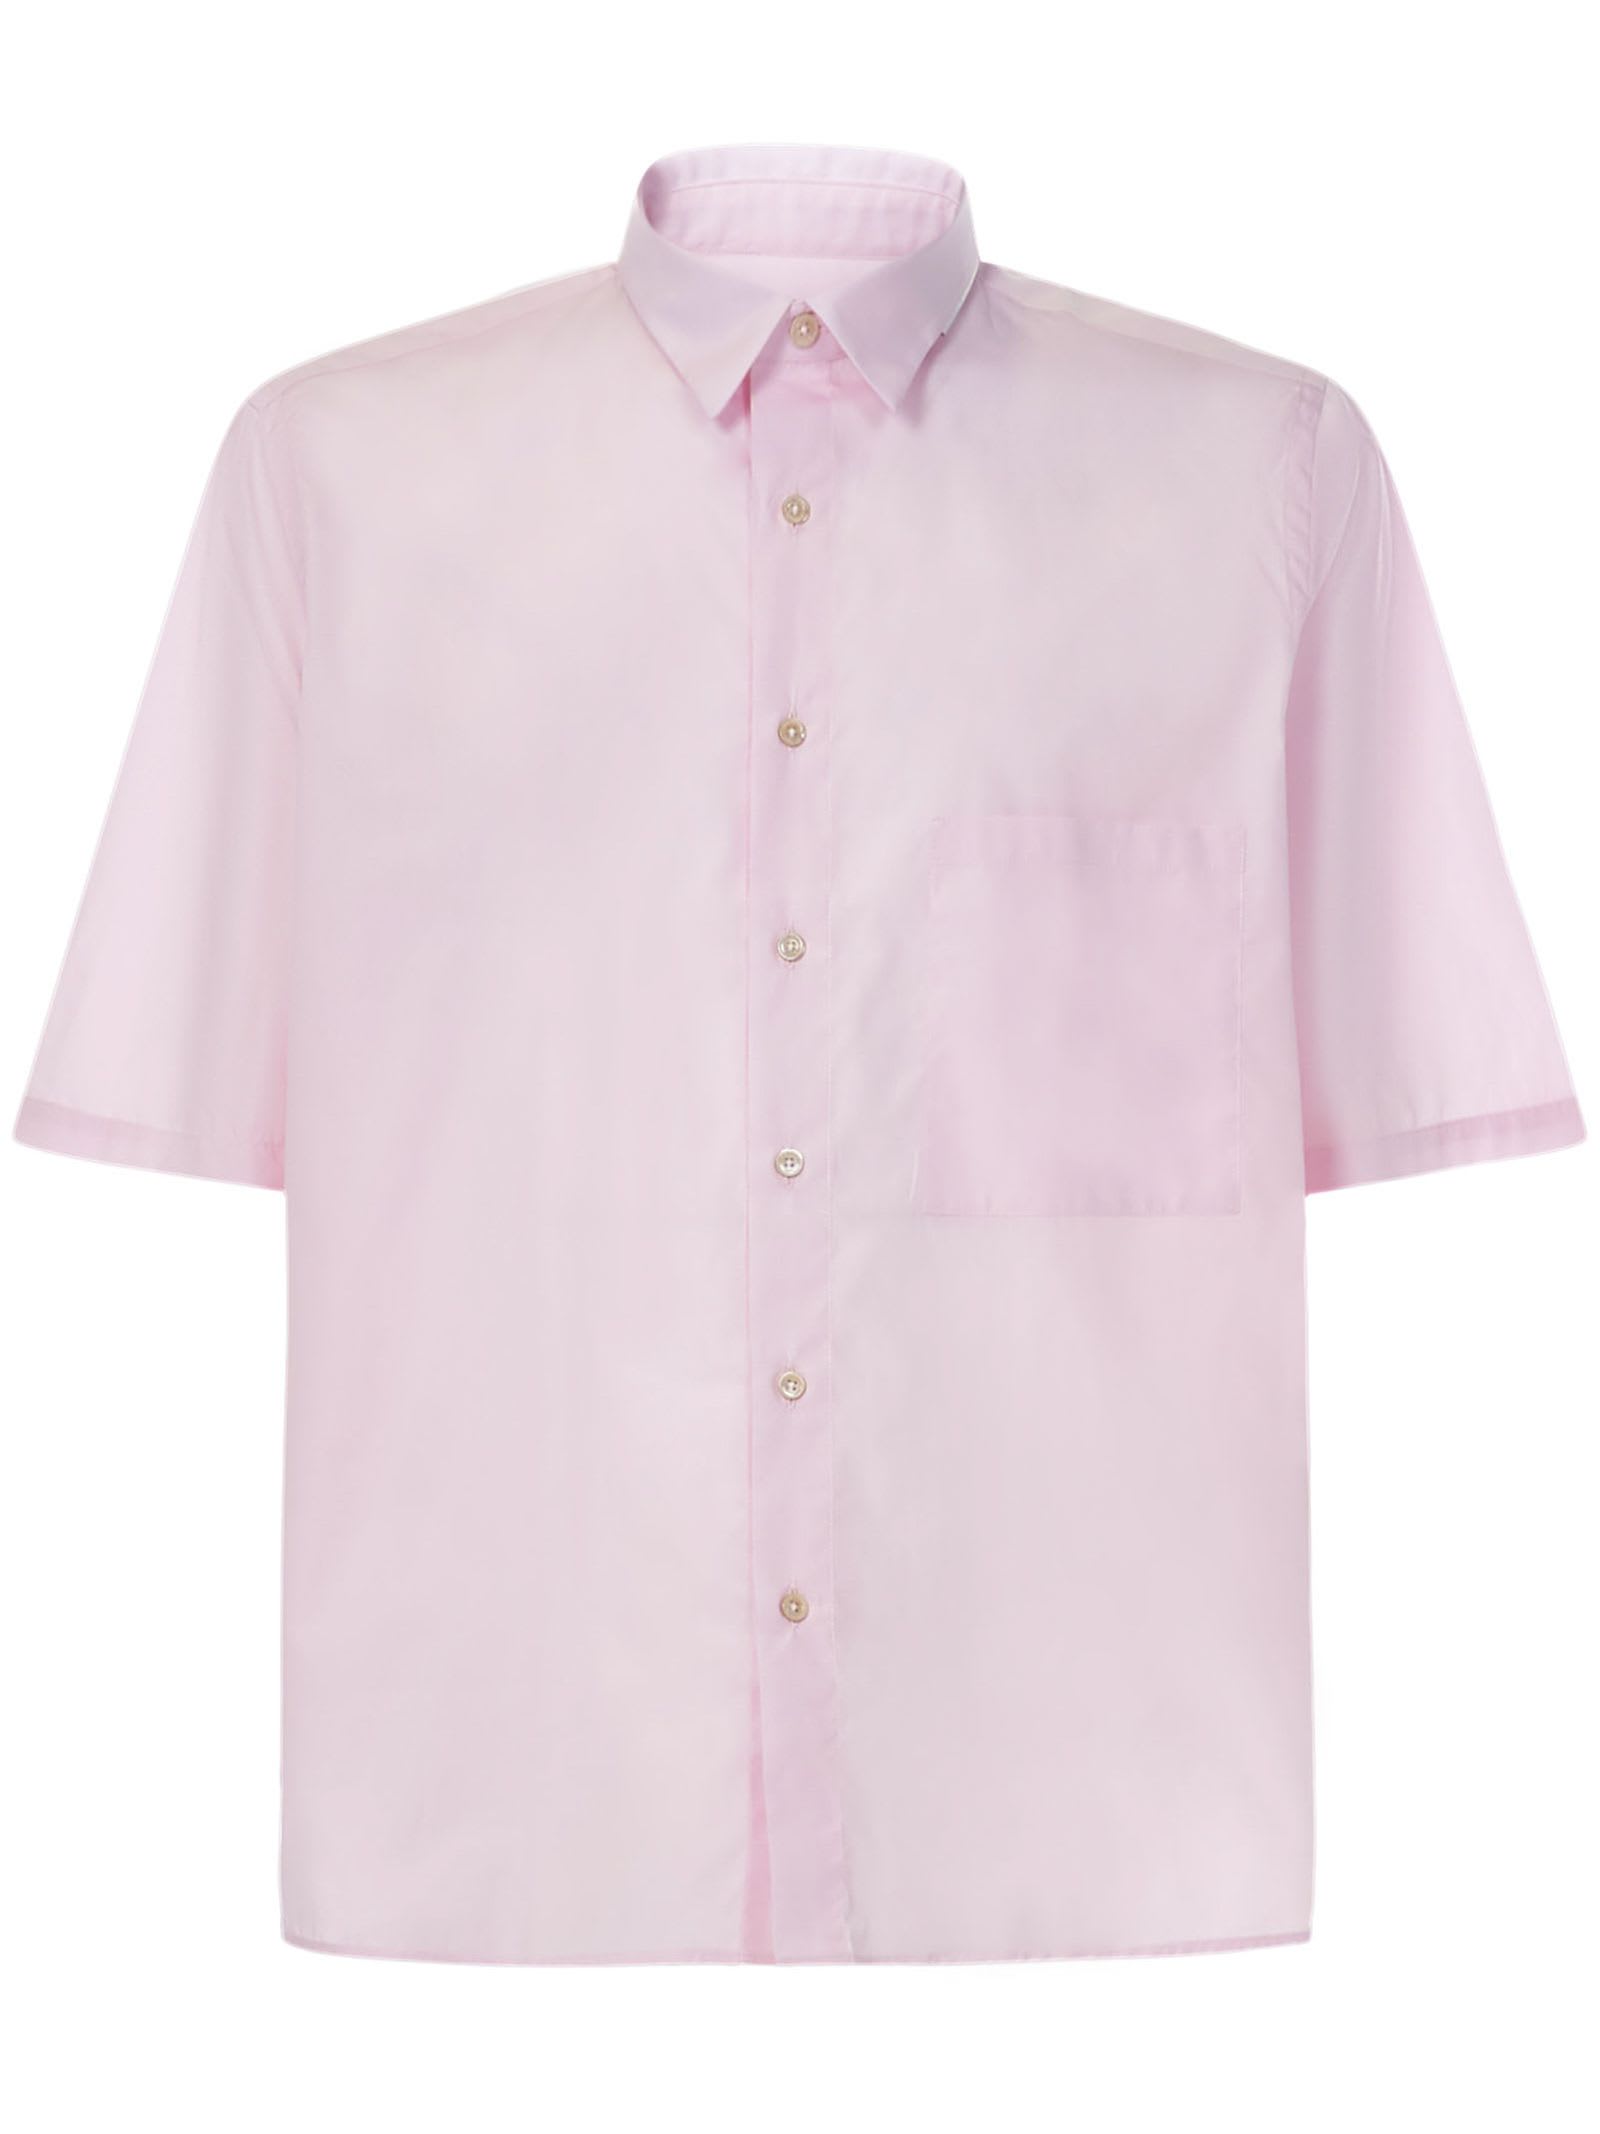 Low Brand Pink Cotton Shirt